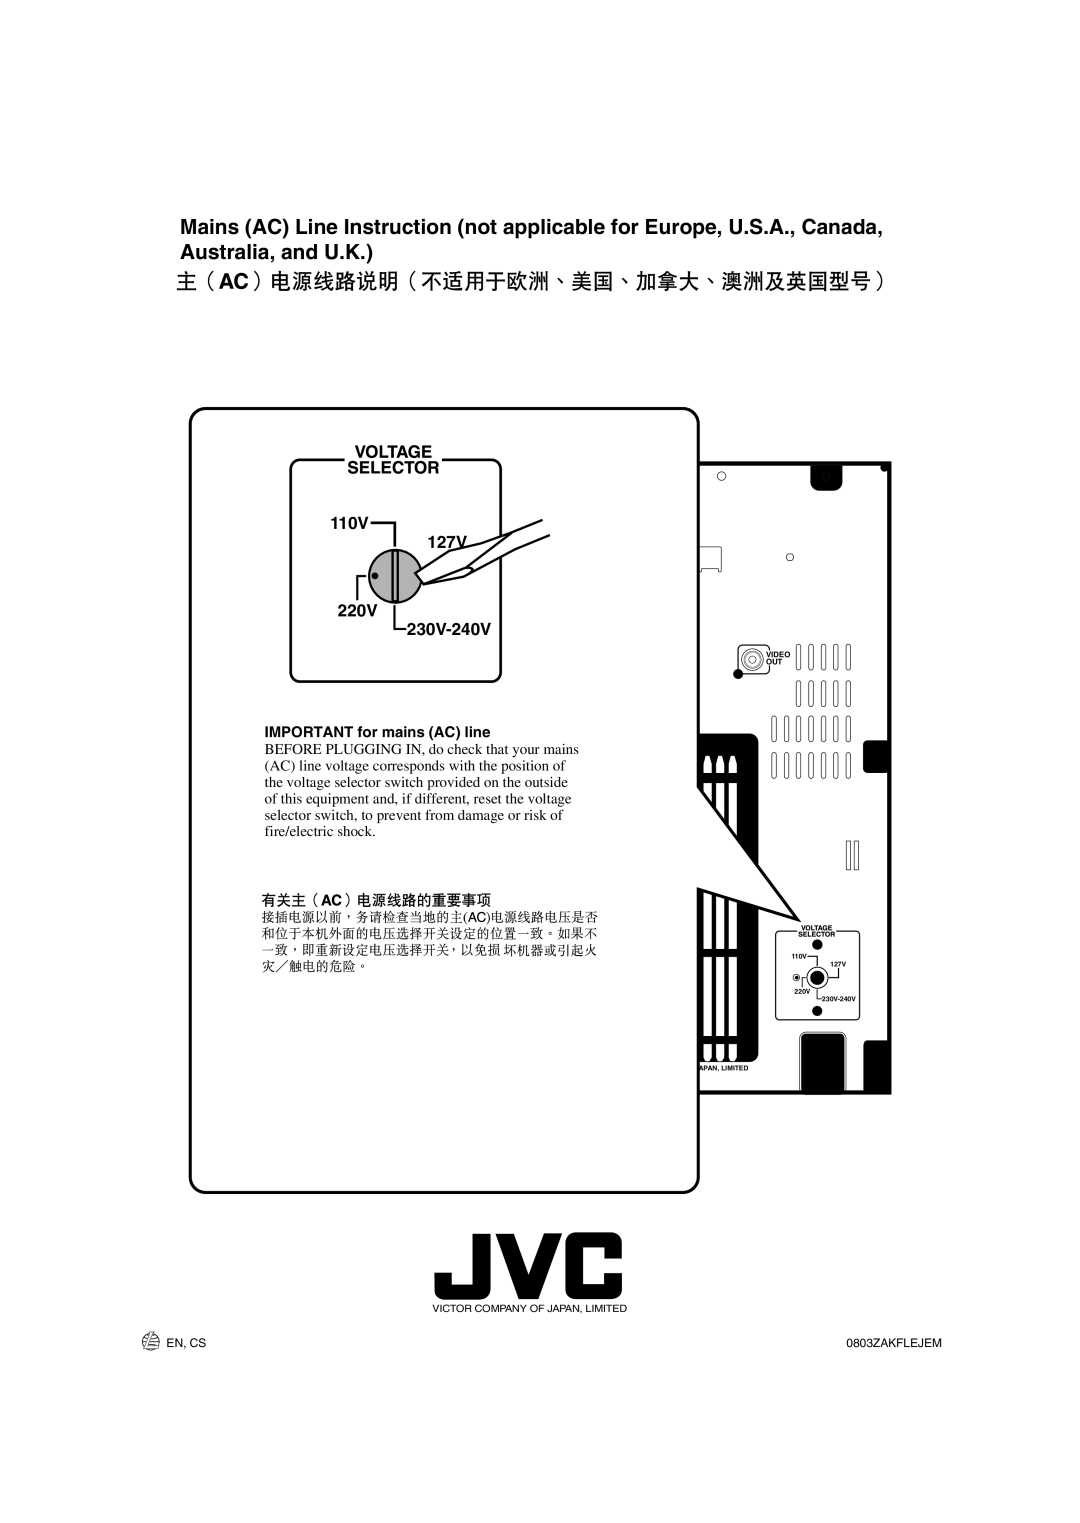 JVC SP-MXSK3, MX-SK3, MX-SK1, CA-MXSK3, SP-MXSK1, CA-MXSK1, GVT0120-001C manual 110V, 220V 230V-240V, IMPORTANTformains AC line 